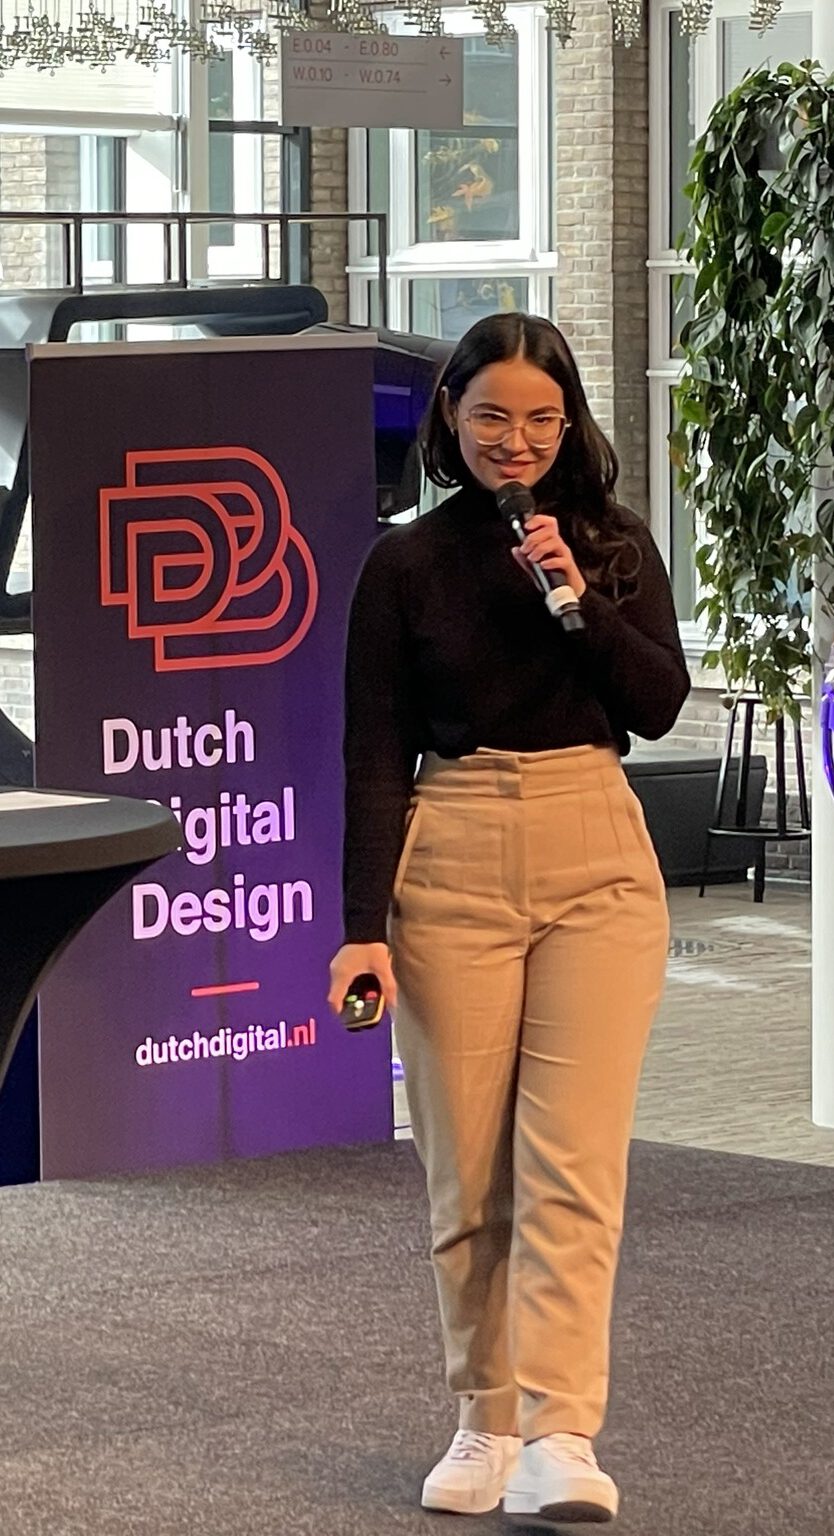 UX designer Dayhana Herrera Pitiching at the Creative jam event by Dutch Digital Design.